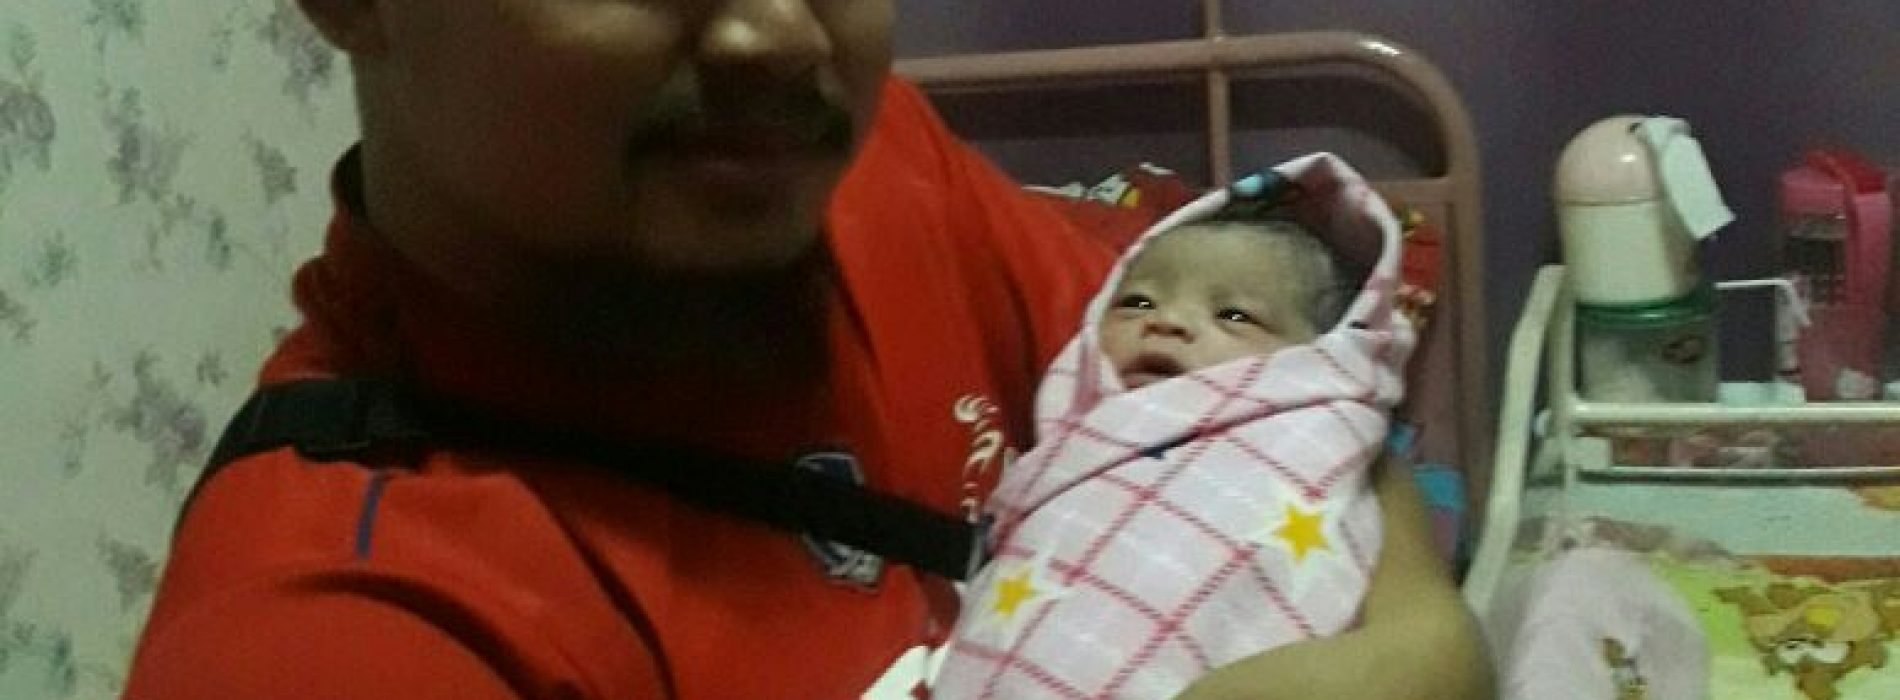 Anak Putri Ke-2 Bang Japar Sekretaris Kohan Pondok Kelapa Kecamatan Duren Sawit Jakarta Timur telah Lahir !!